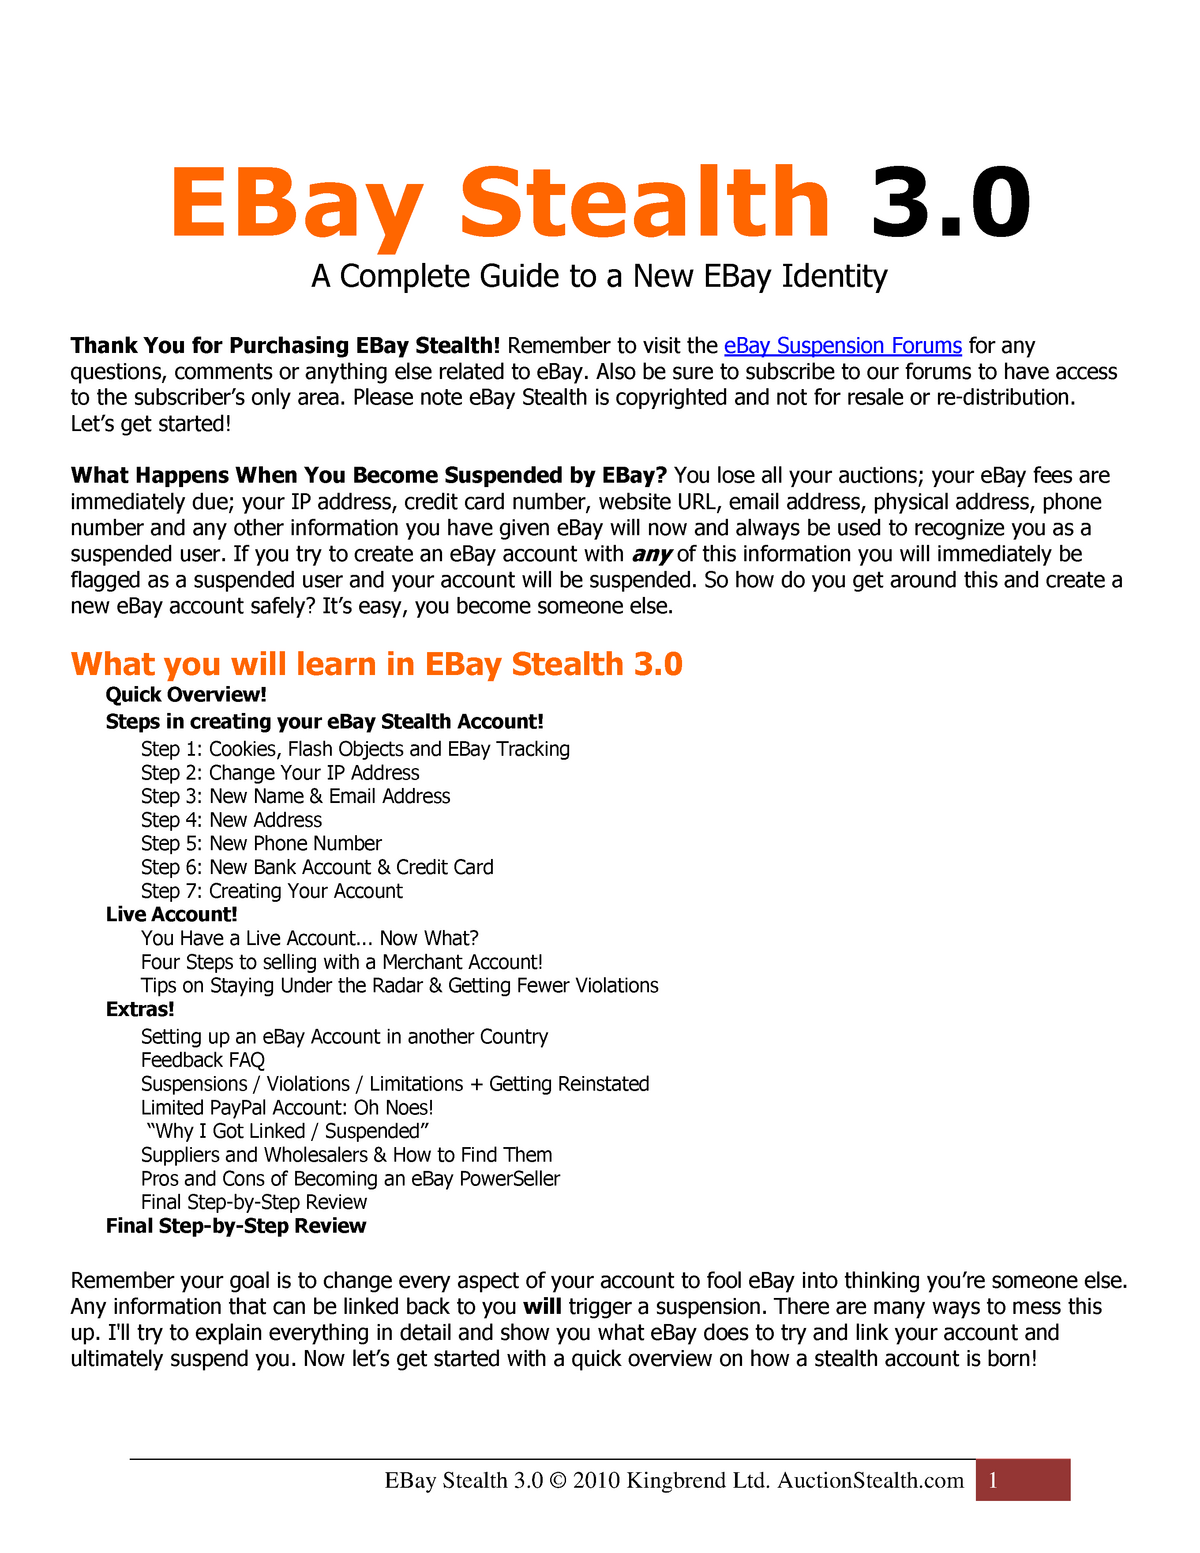 download ebay stealth guide